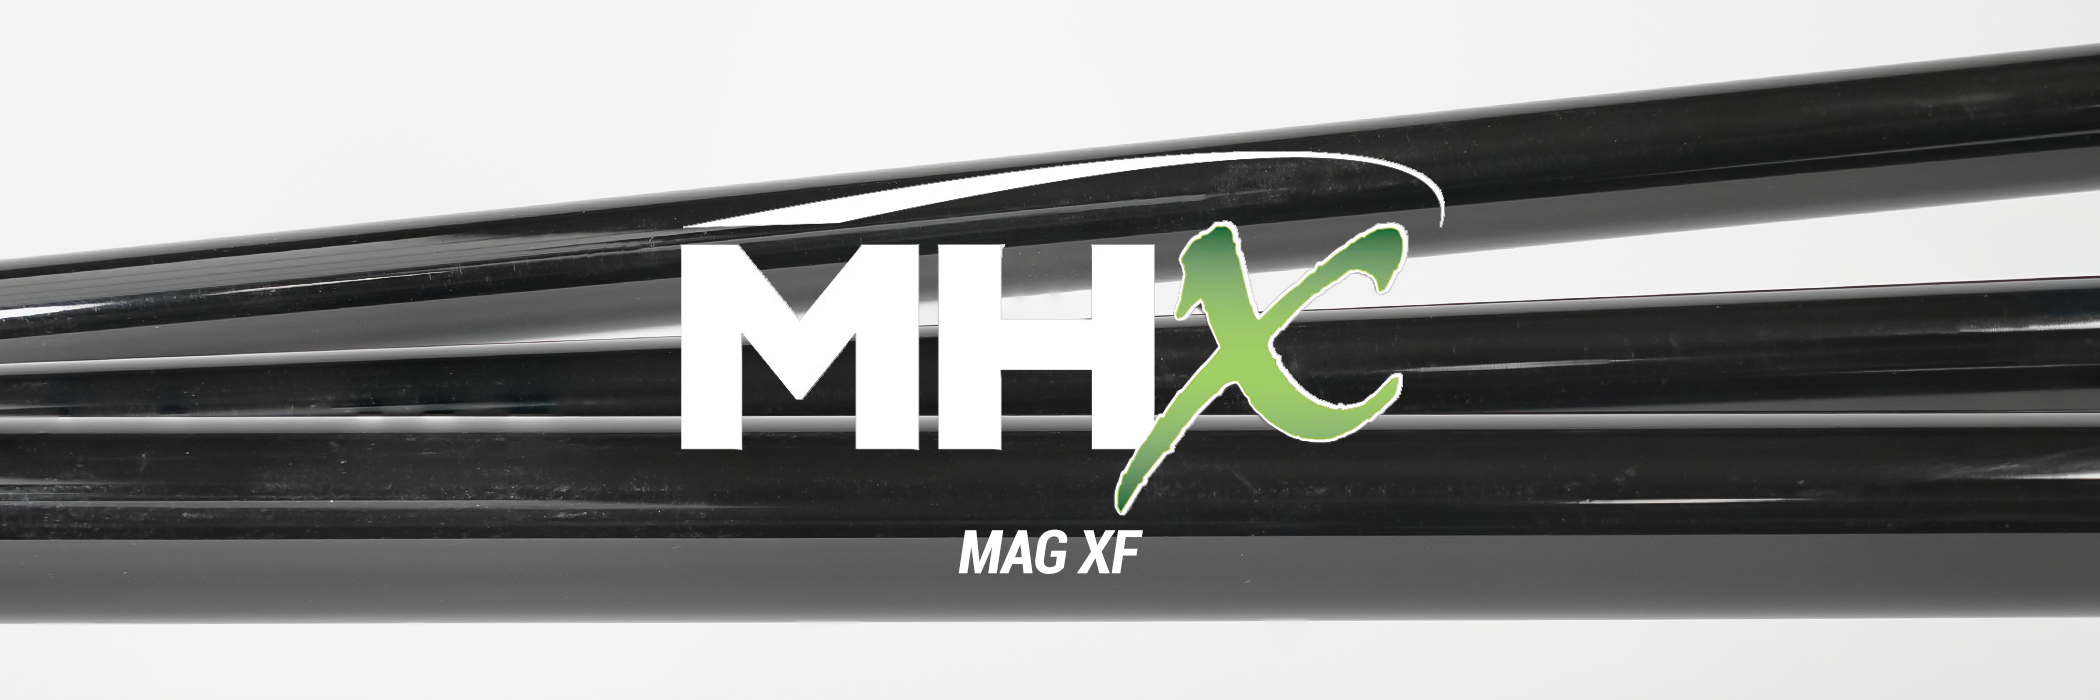 MHX - Mag XF